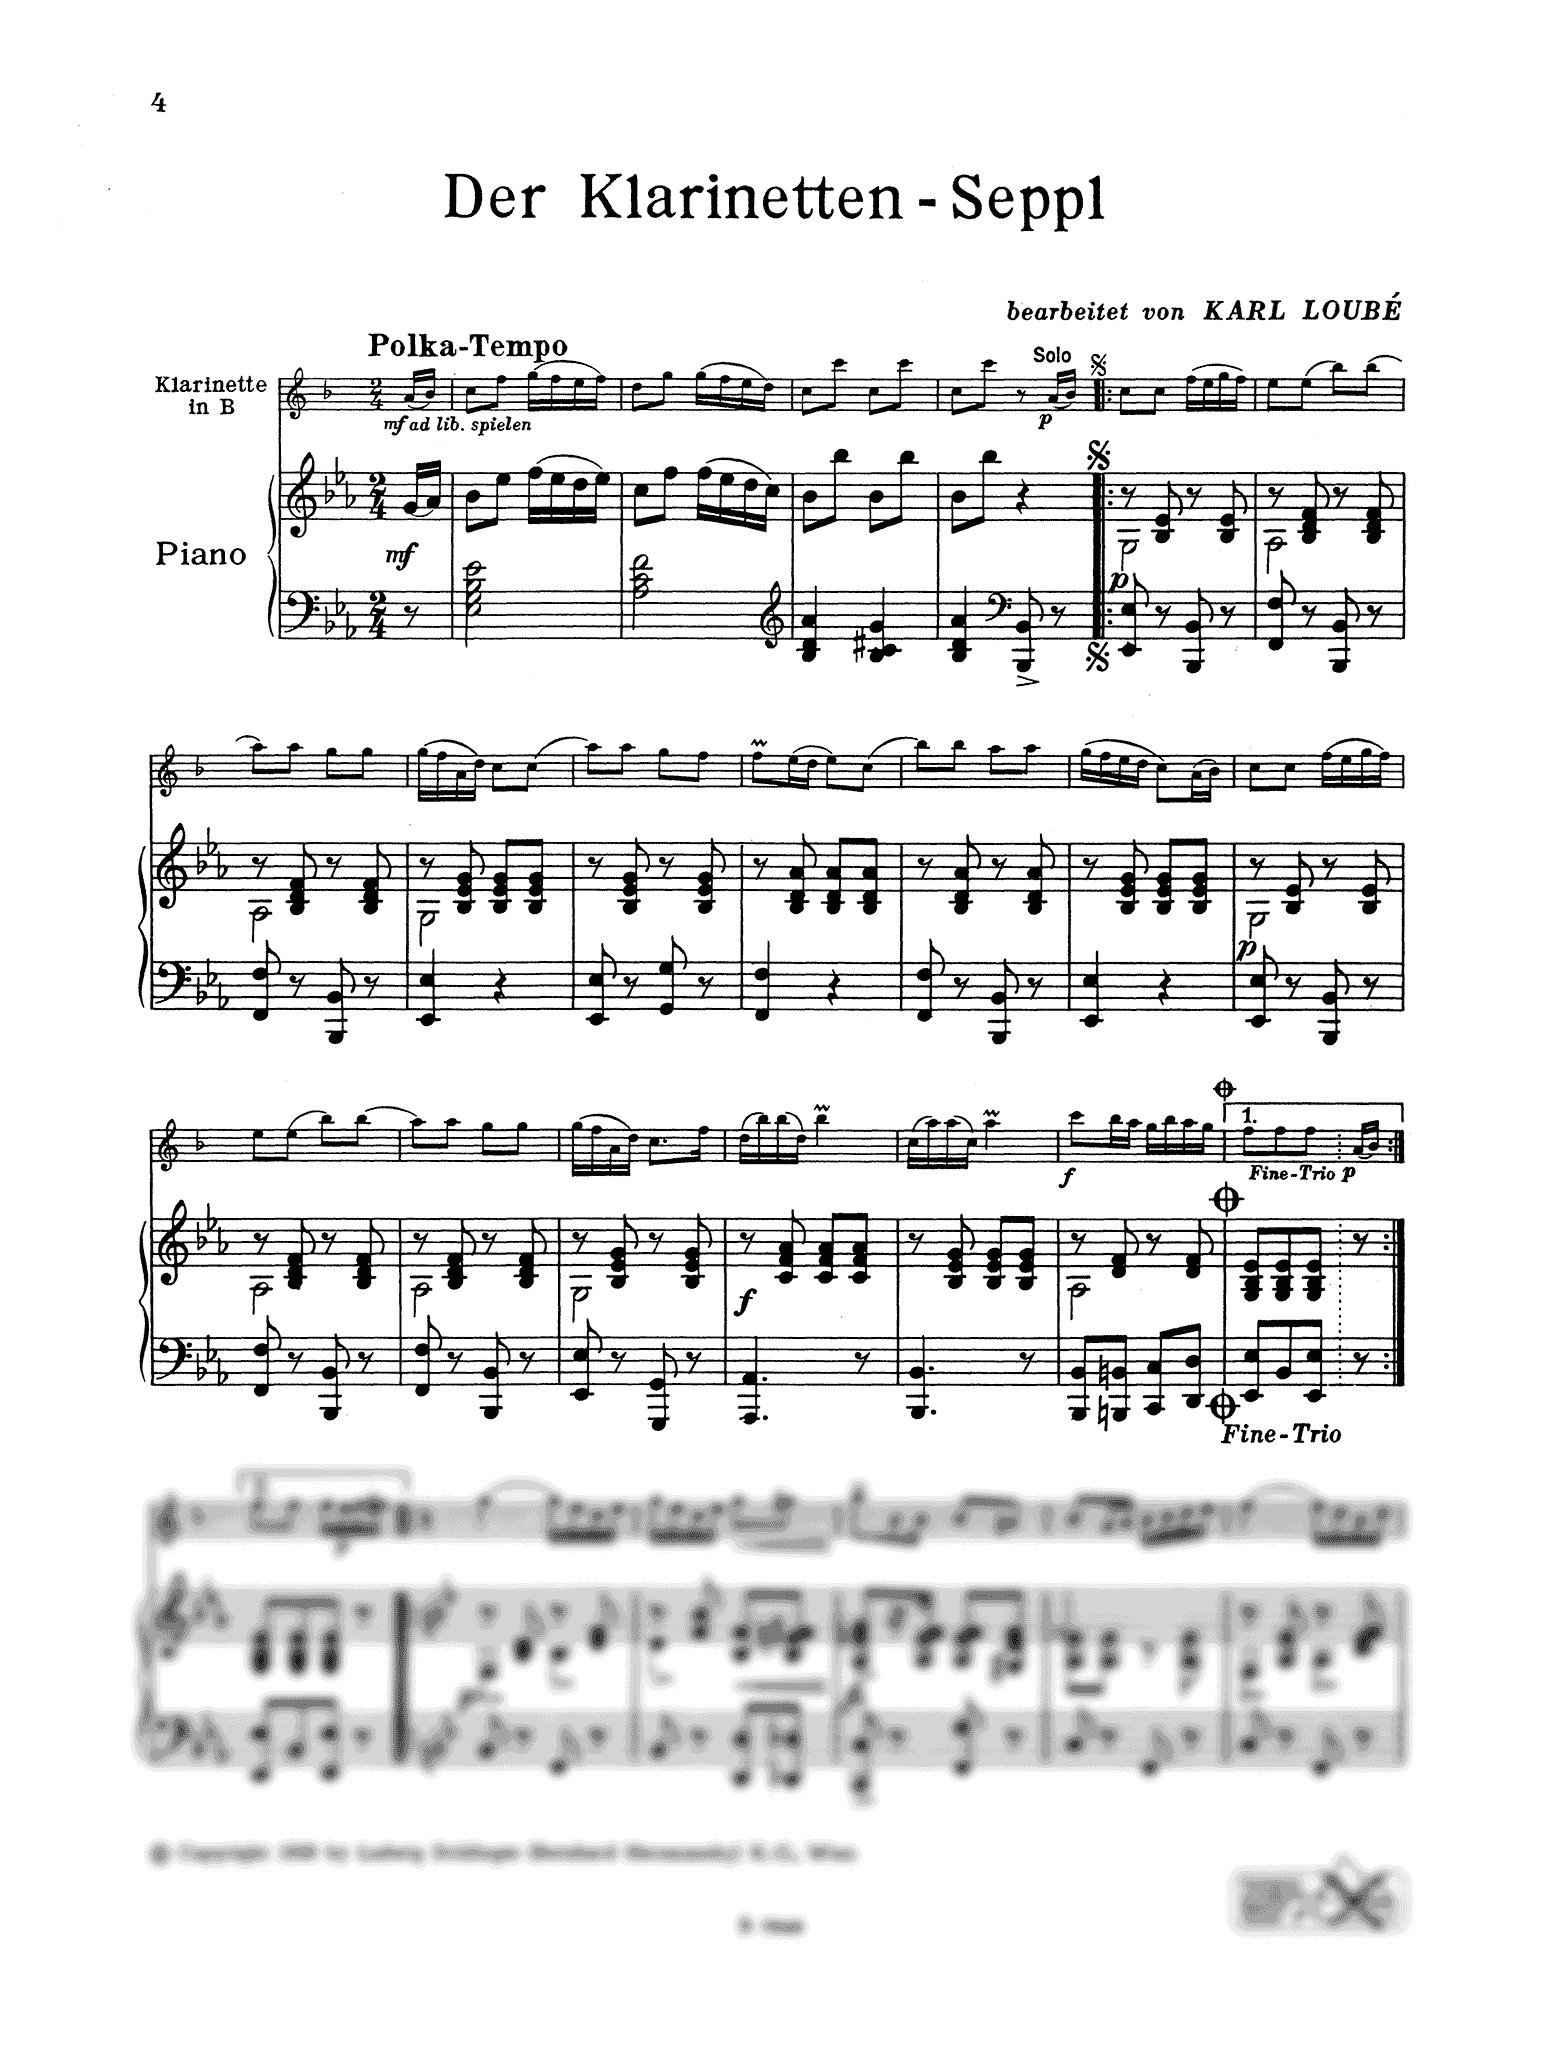 Der Klarinetten-Seppl score